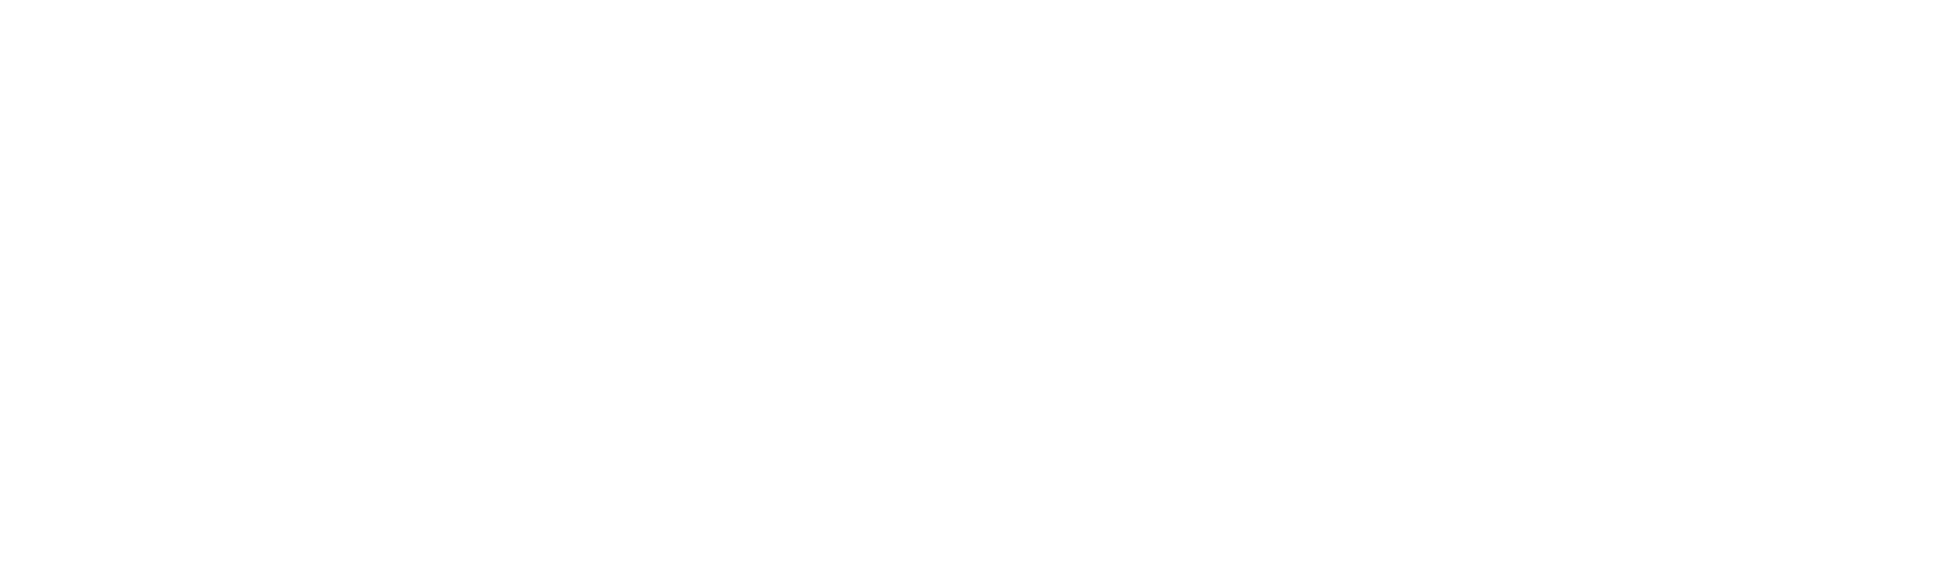 Mari 6.0 - White (RGB website)